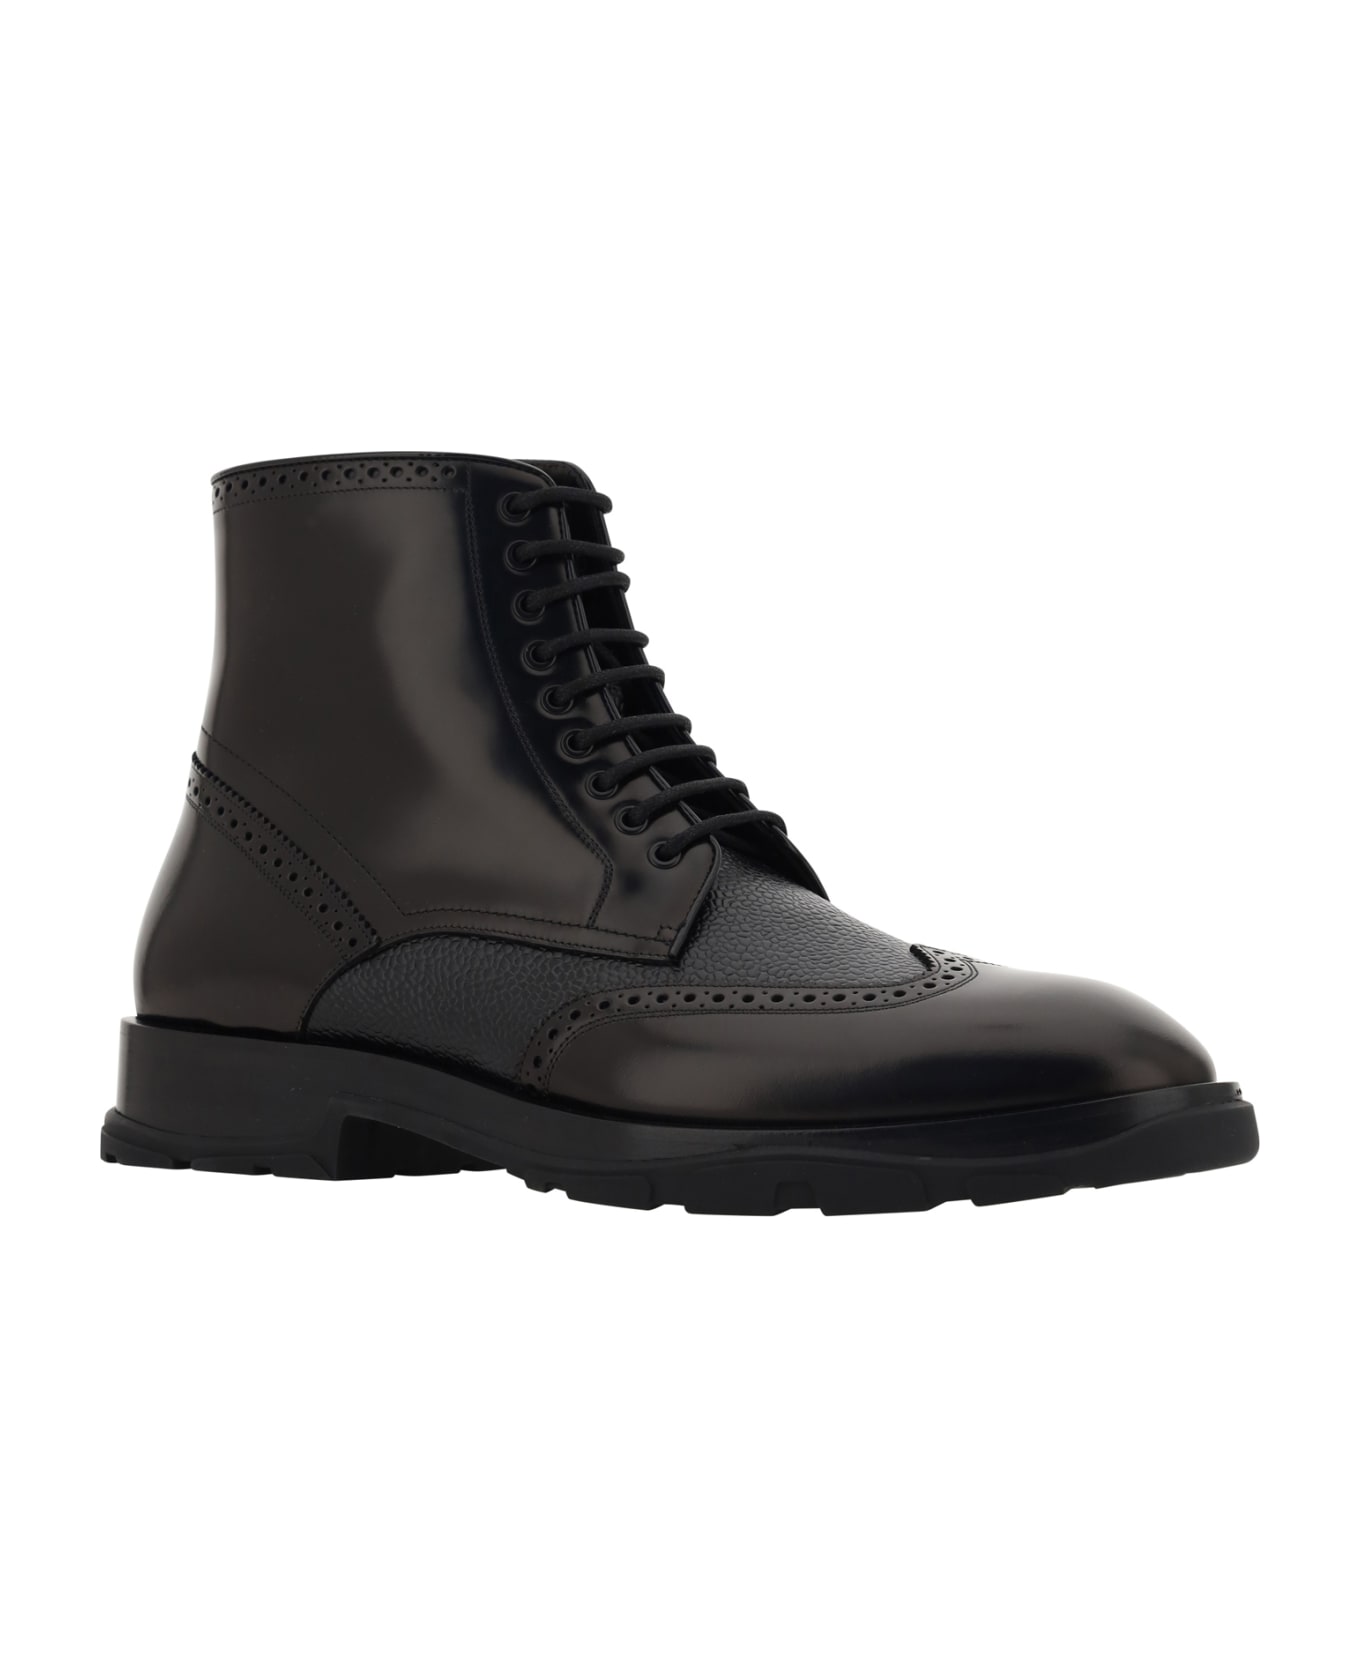 Alexander McQueen Lace Up Boots - Black/black/black